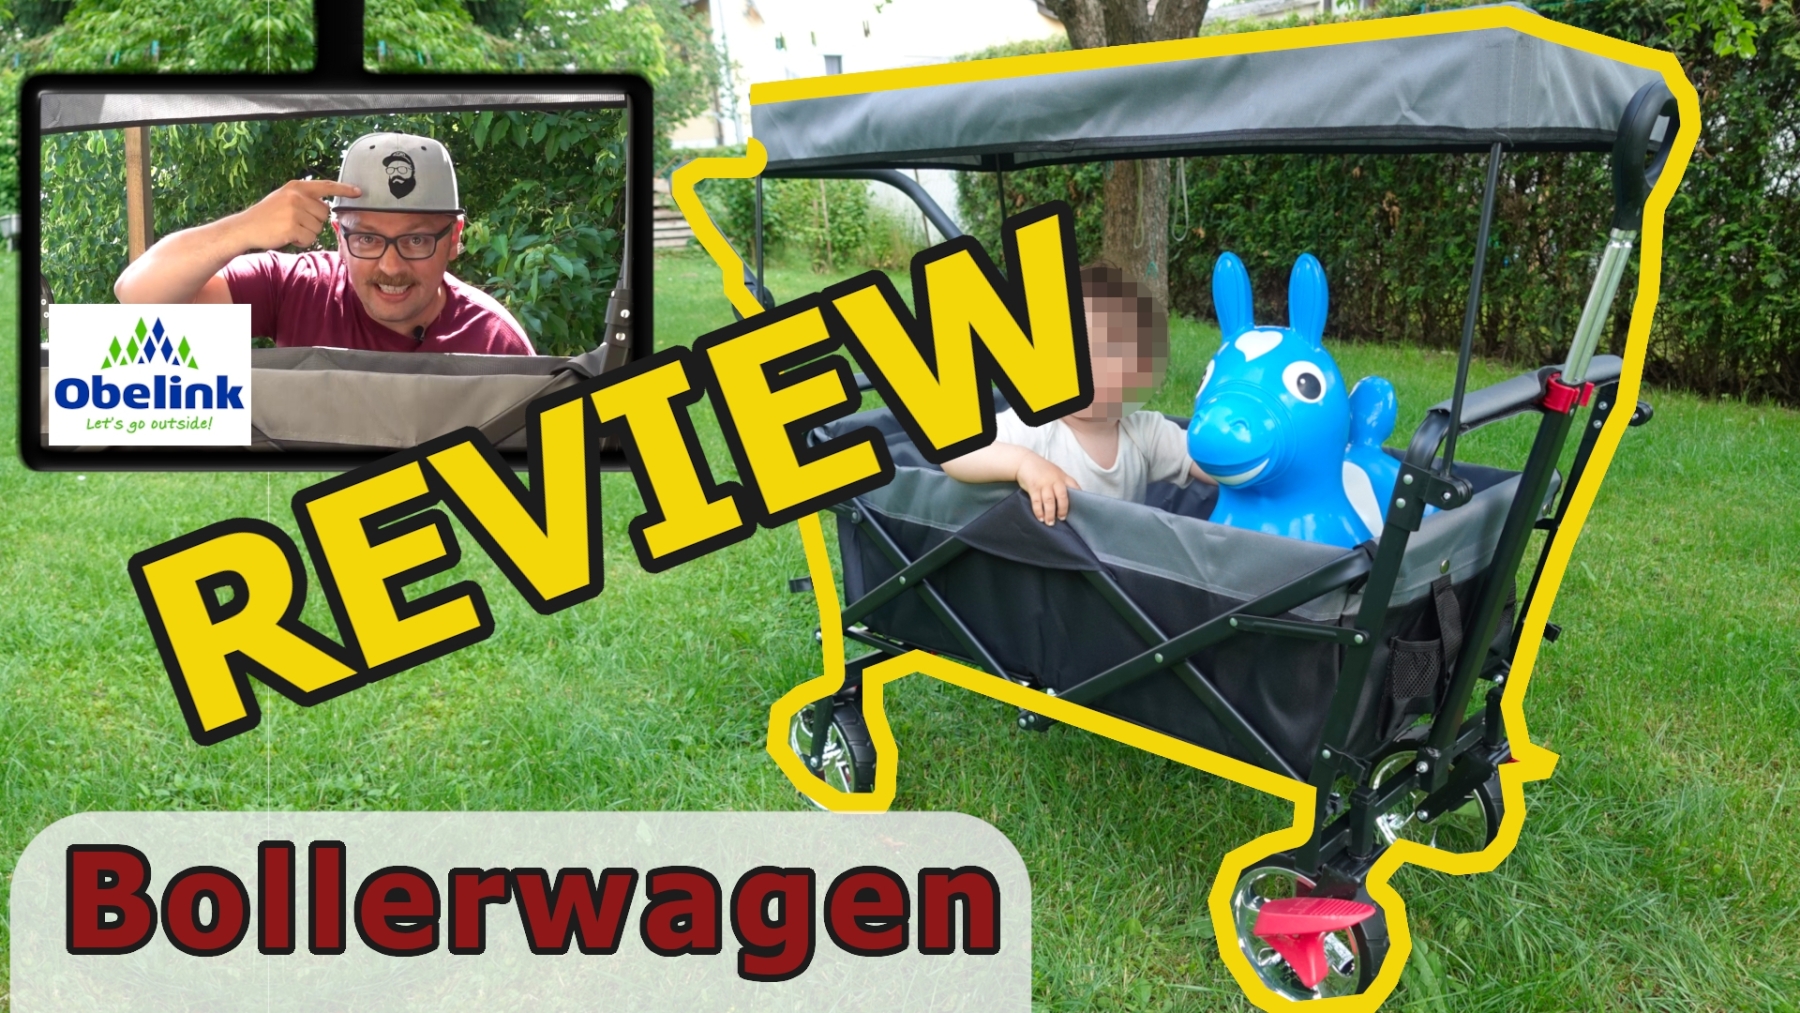 Bollerwagen_Video-Review